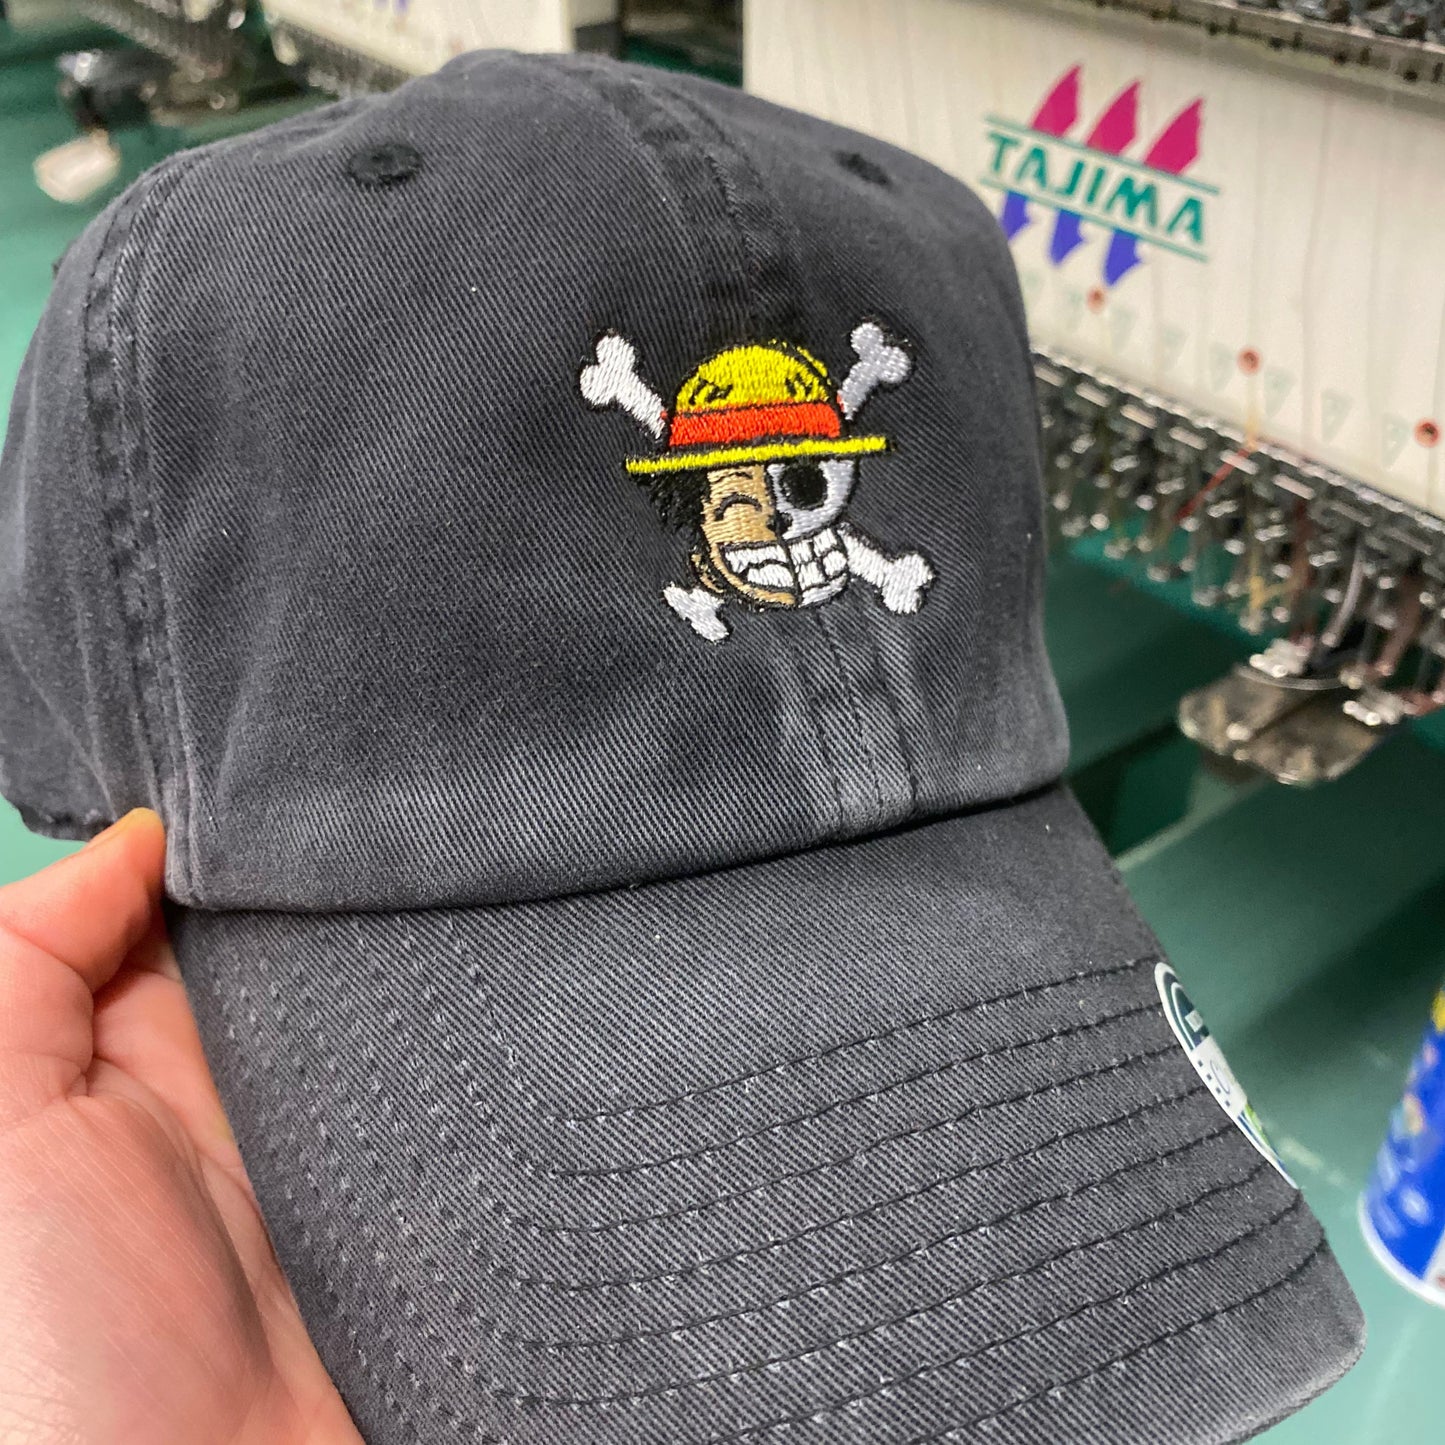 One Piece Skull & Bones Embroidered Hat